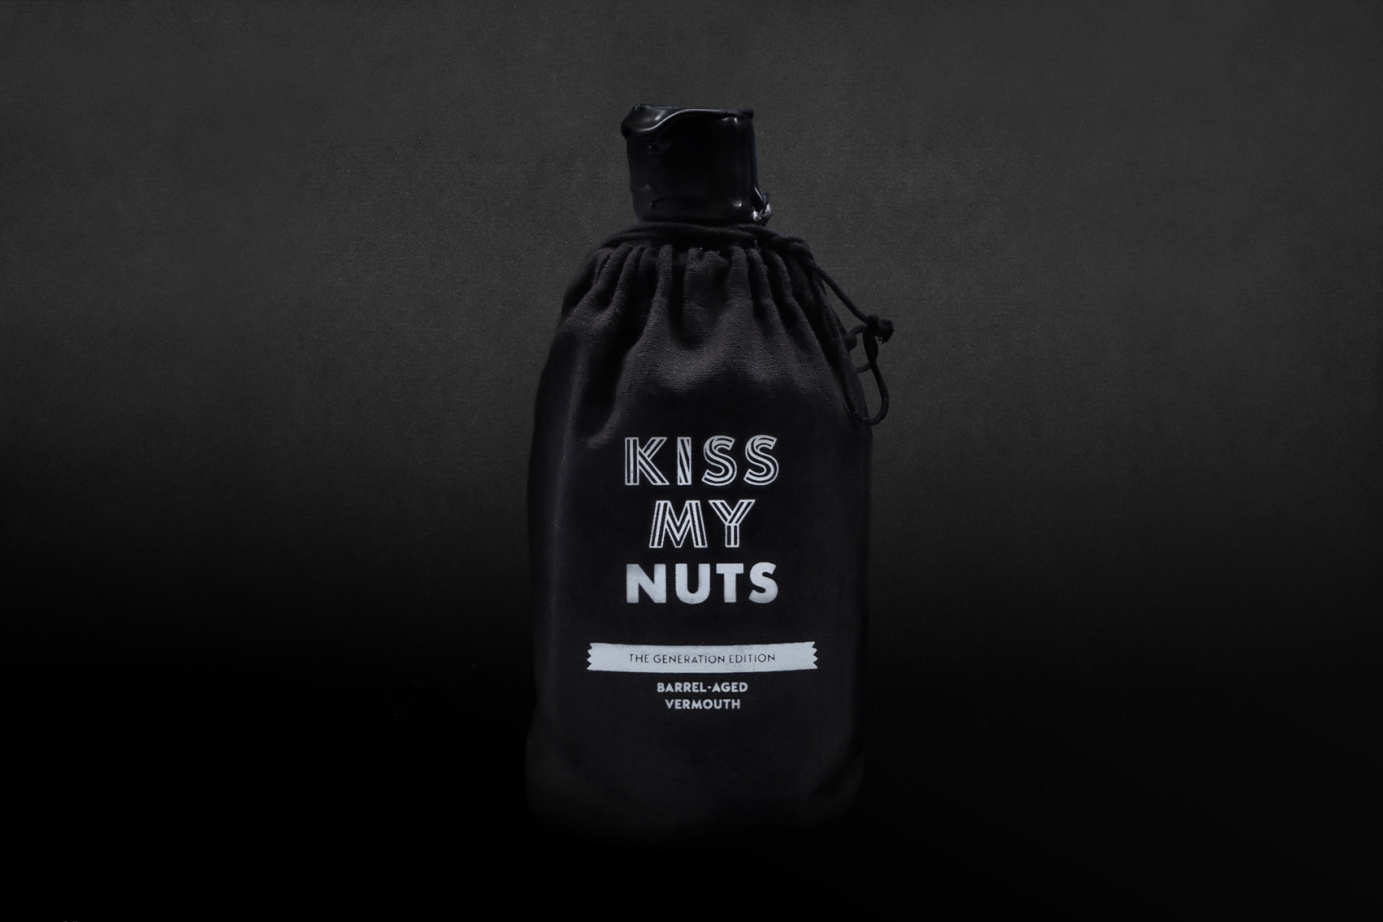 Kiss My Nuts Packaging